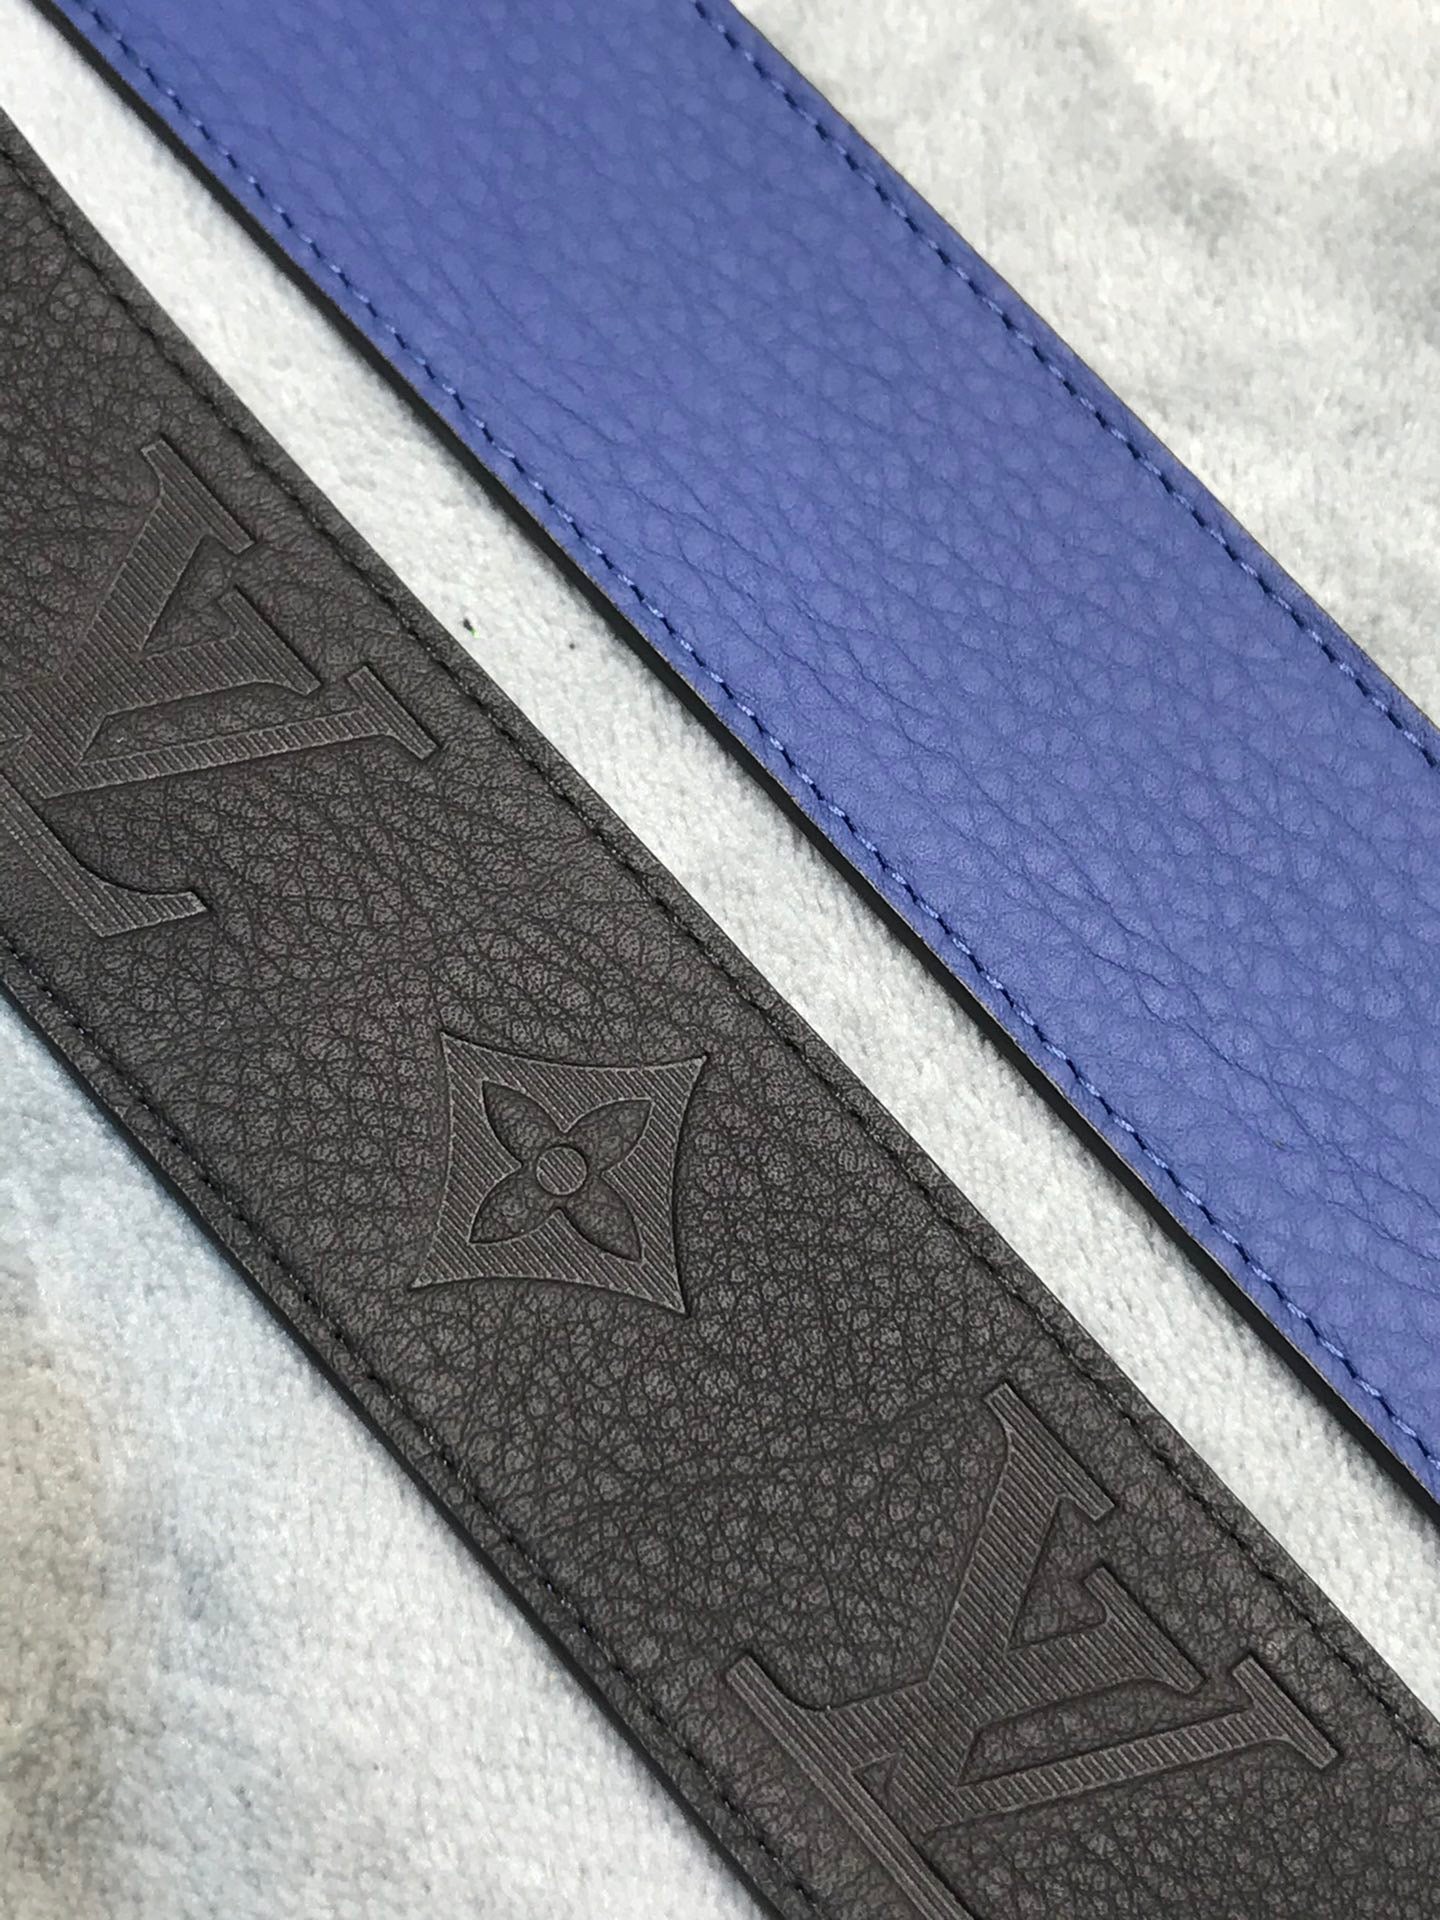 Blue and Black Belts